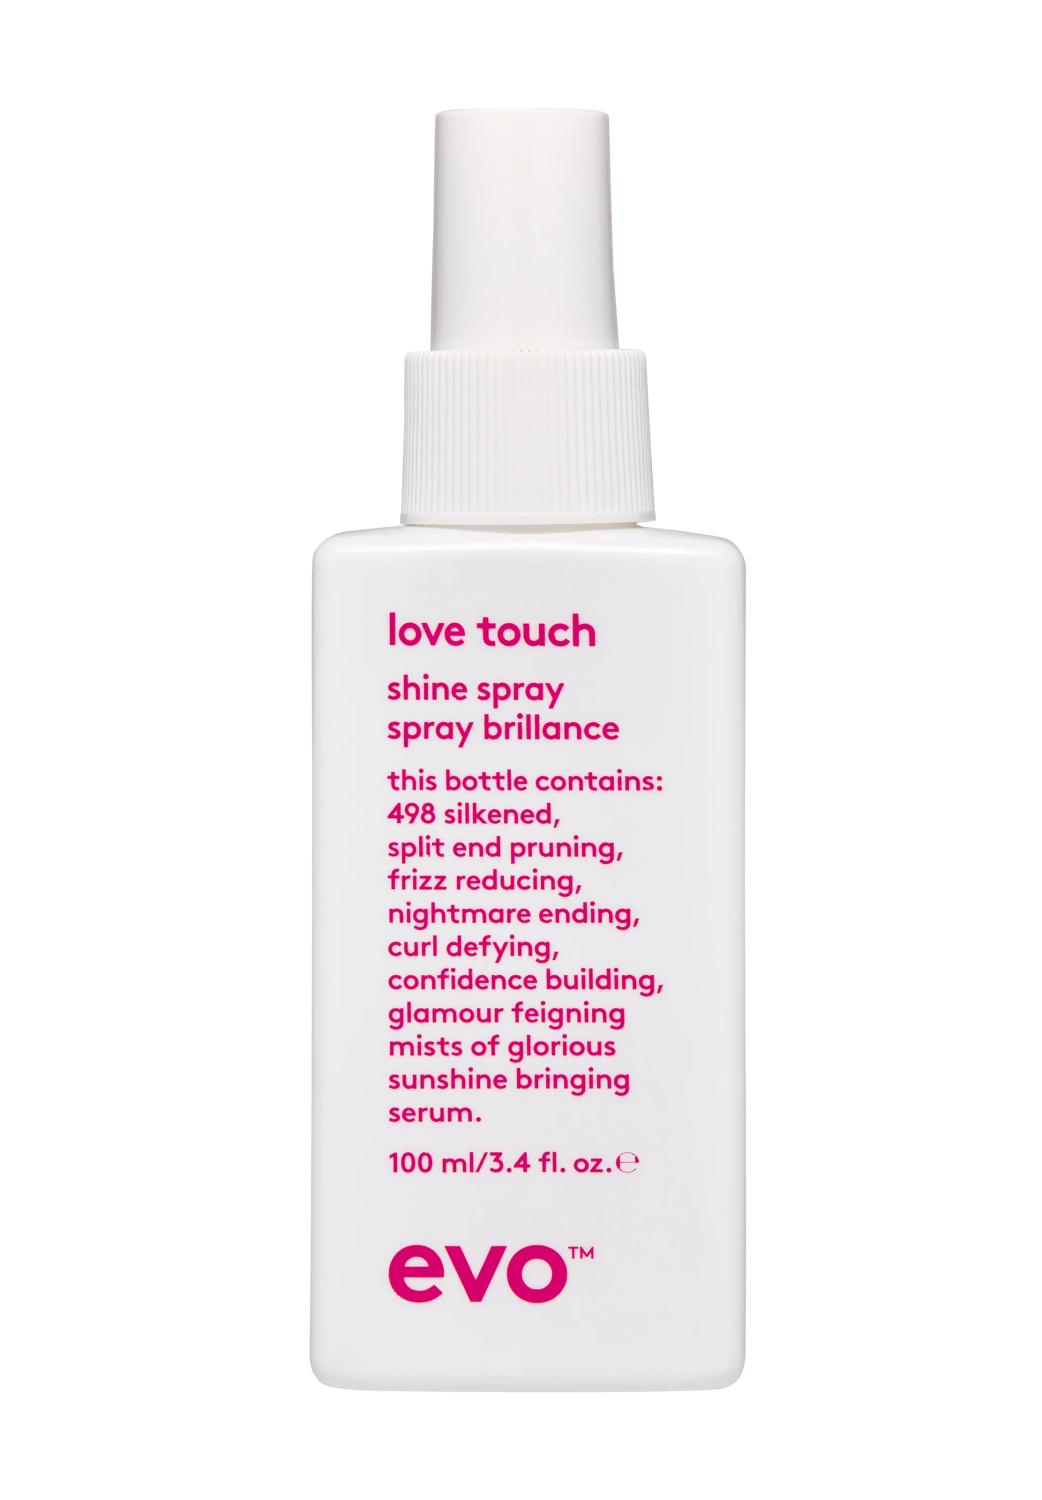 Evo Love Touch Shine Spray 100ml - интернет-магазин профессиональной косметики Spadream, изображение 52270